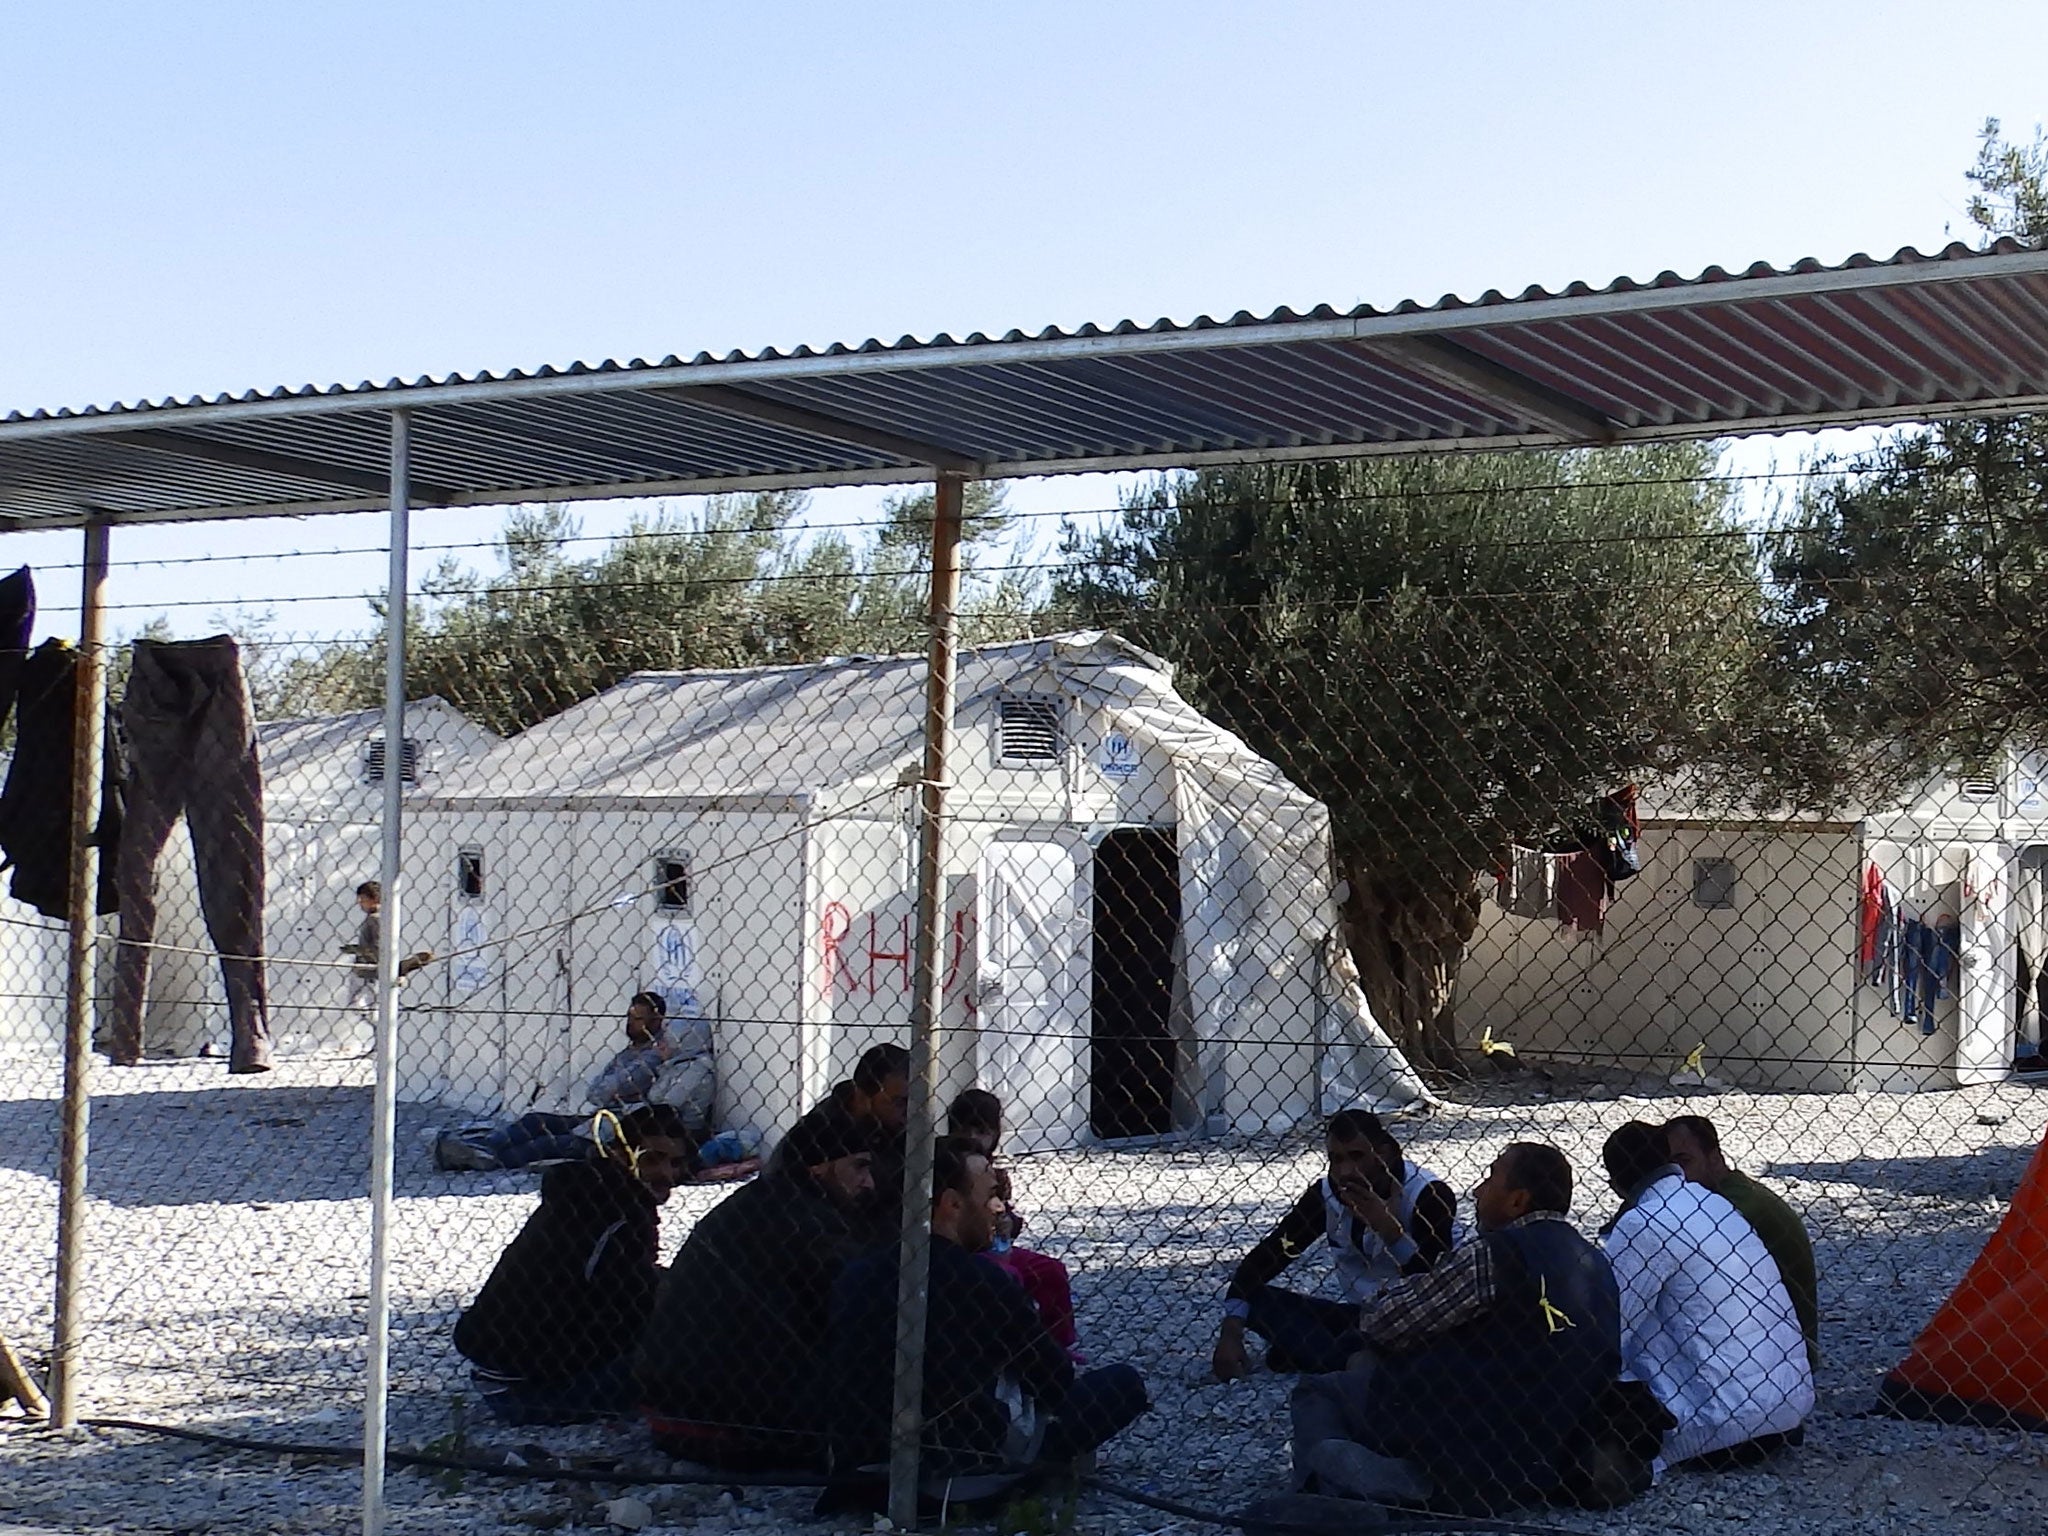 Asylum seekers sitting outside the Ikea shelters at Kara Tepe refugee camp in Lesbos, November 2015.